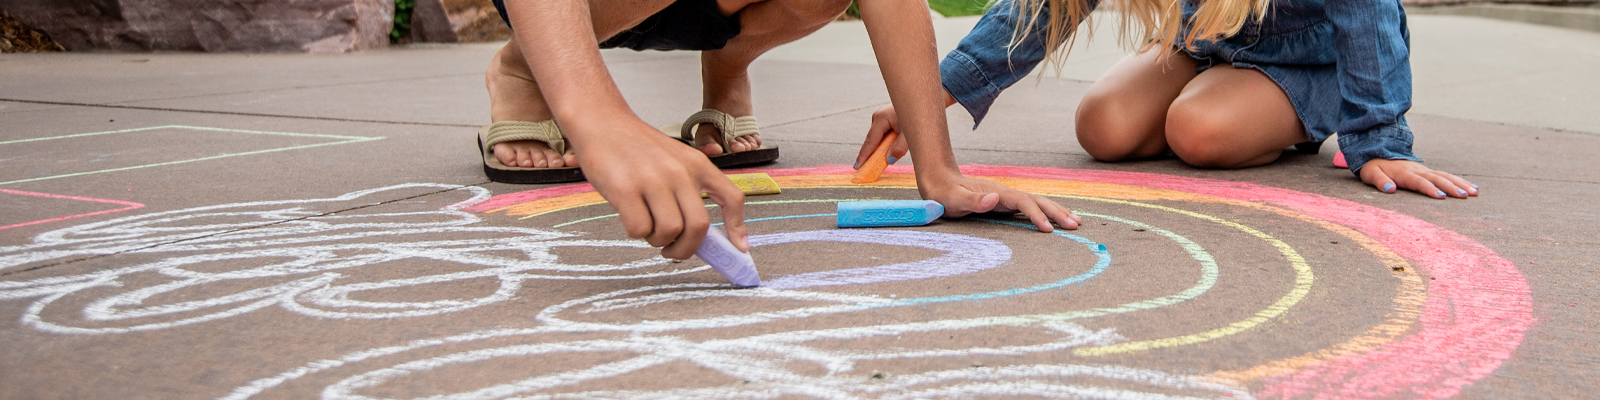 Kids drawing with sidewalk chalk